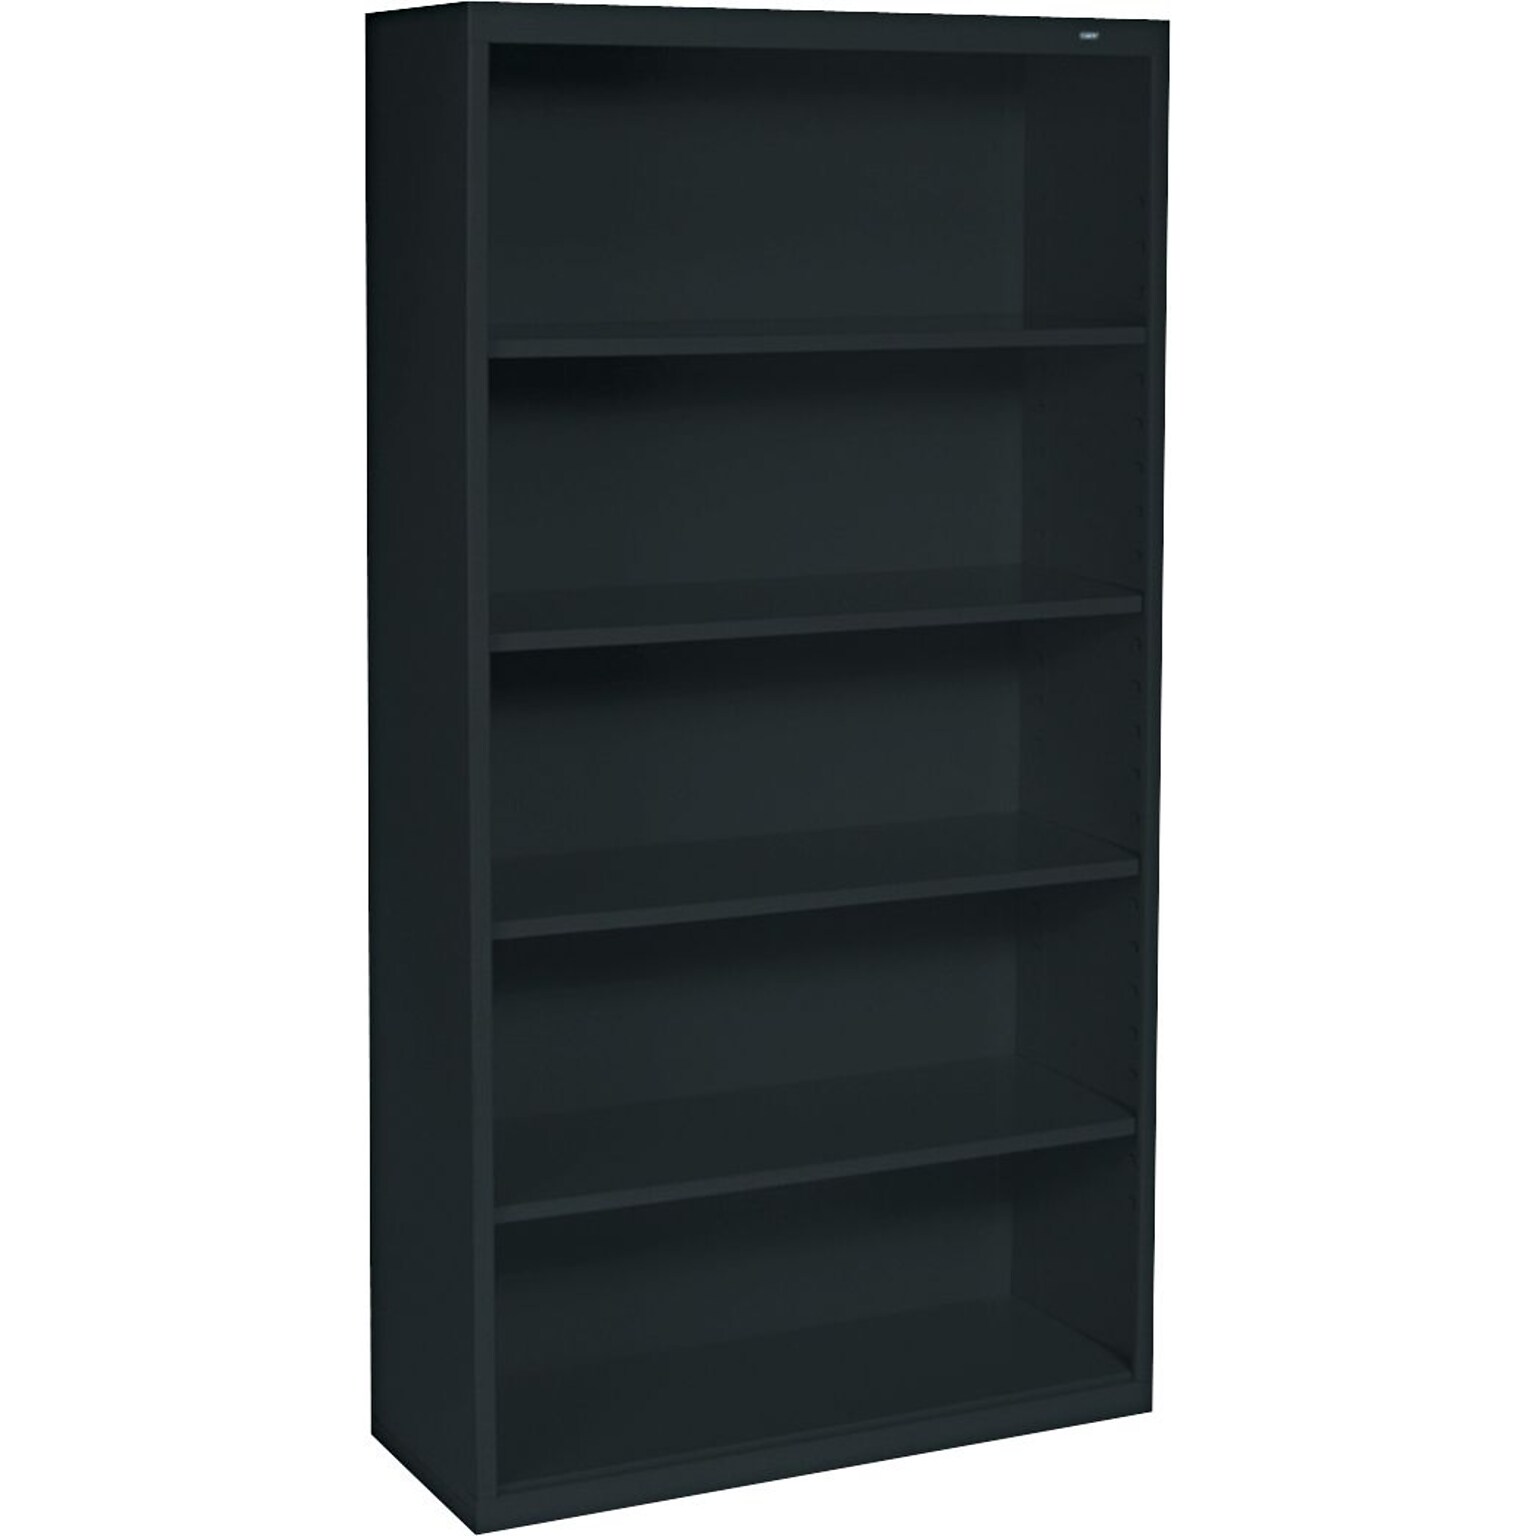 Tennsco 66 5-Shelf Bookcase with Adjustable Shelves, Black, Metal (101094)